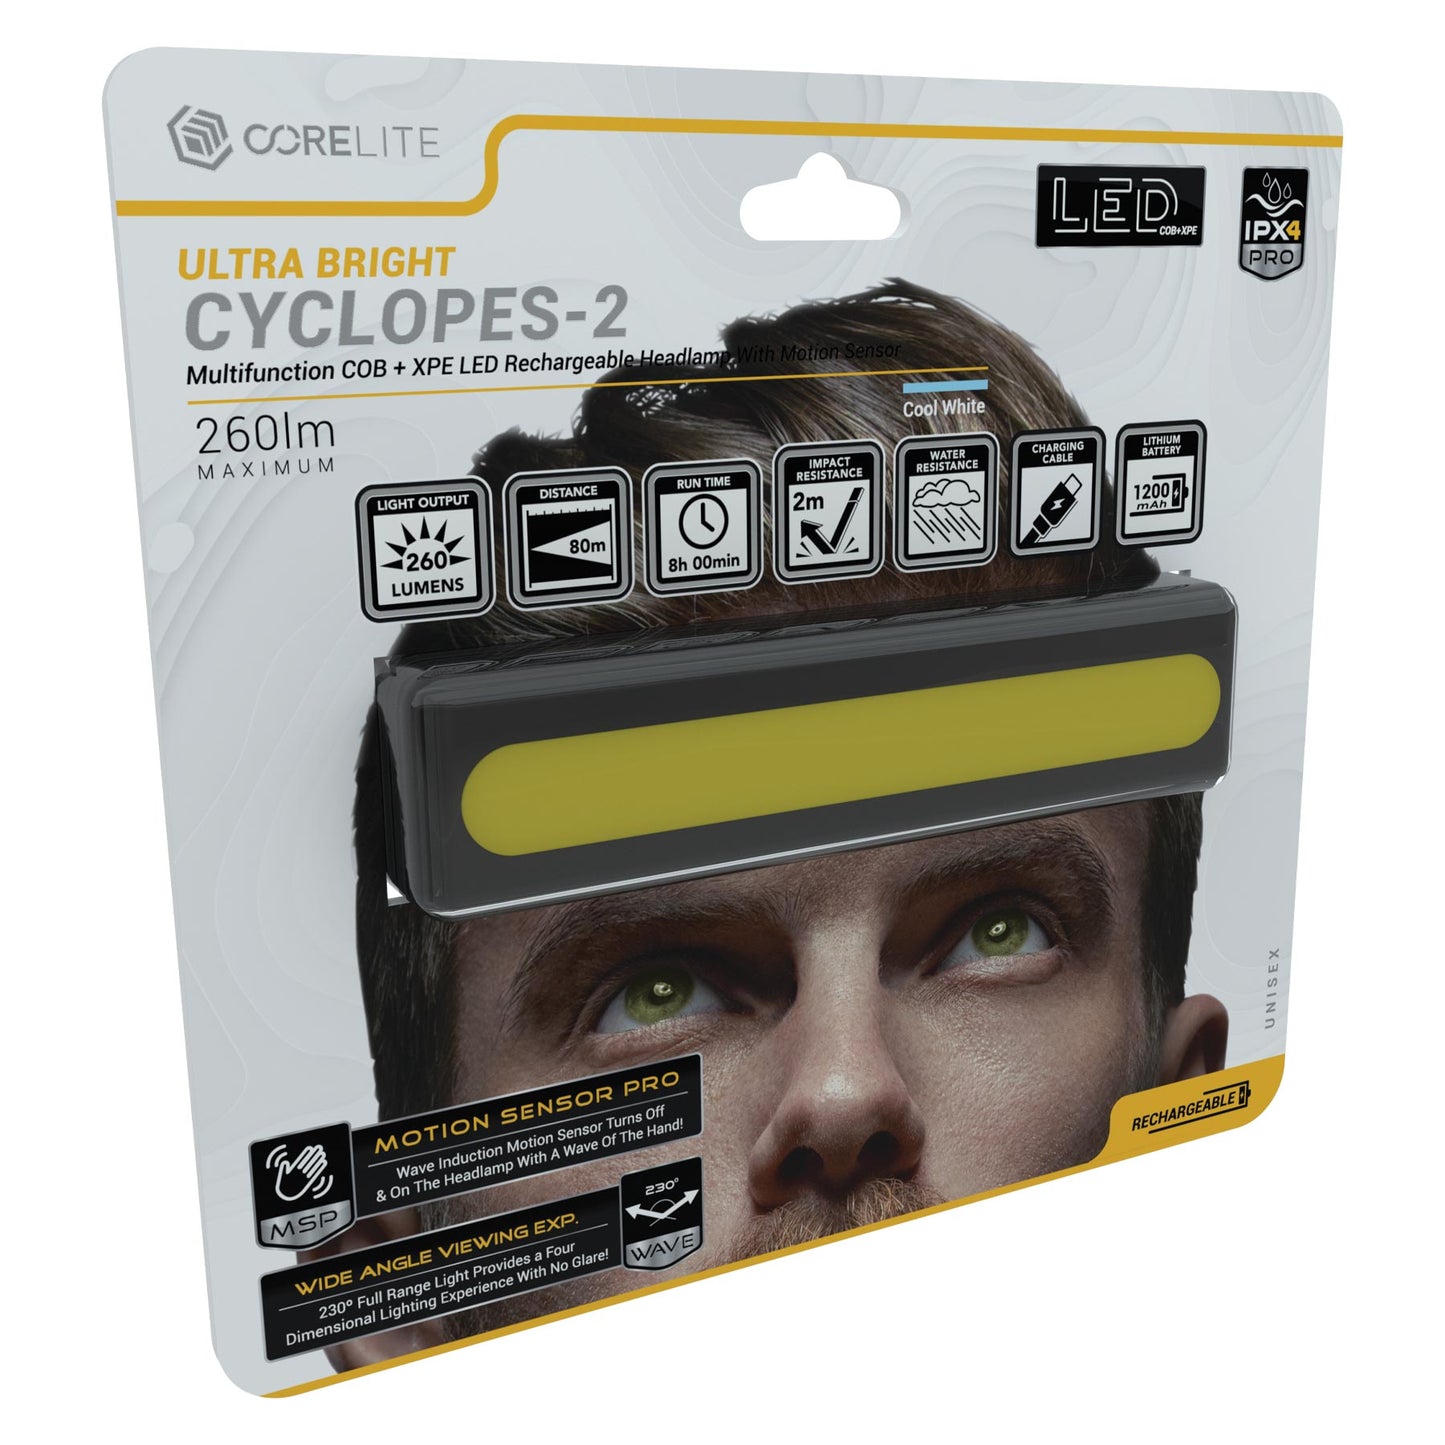 Cyclopes-2 Rechargeable Headlamp alt 1